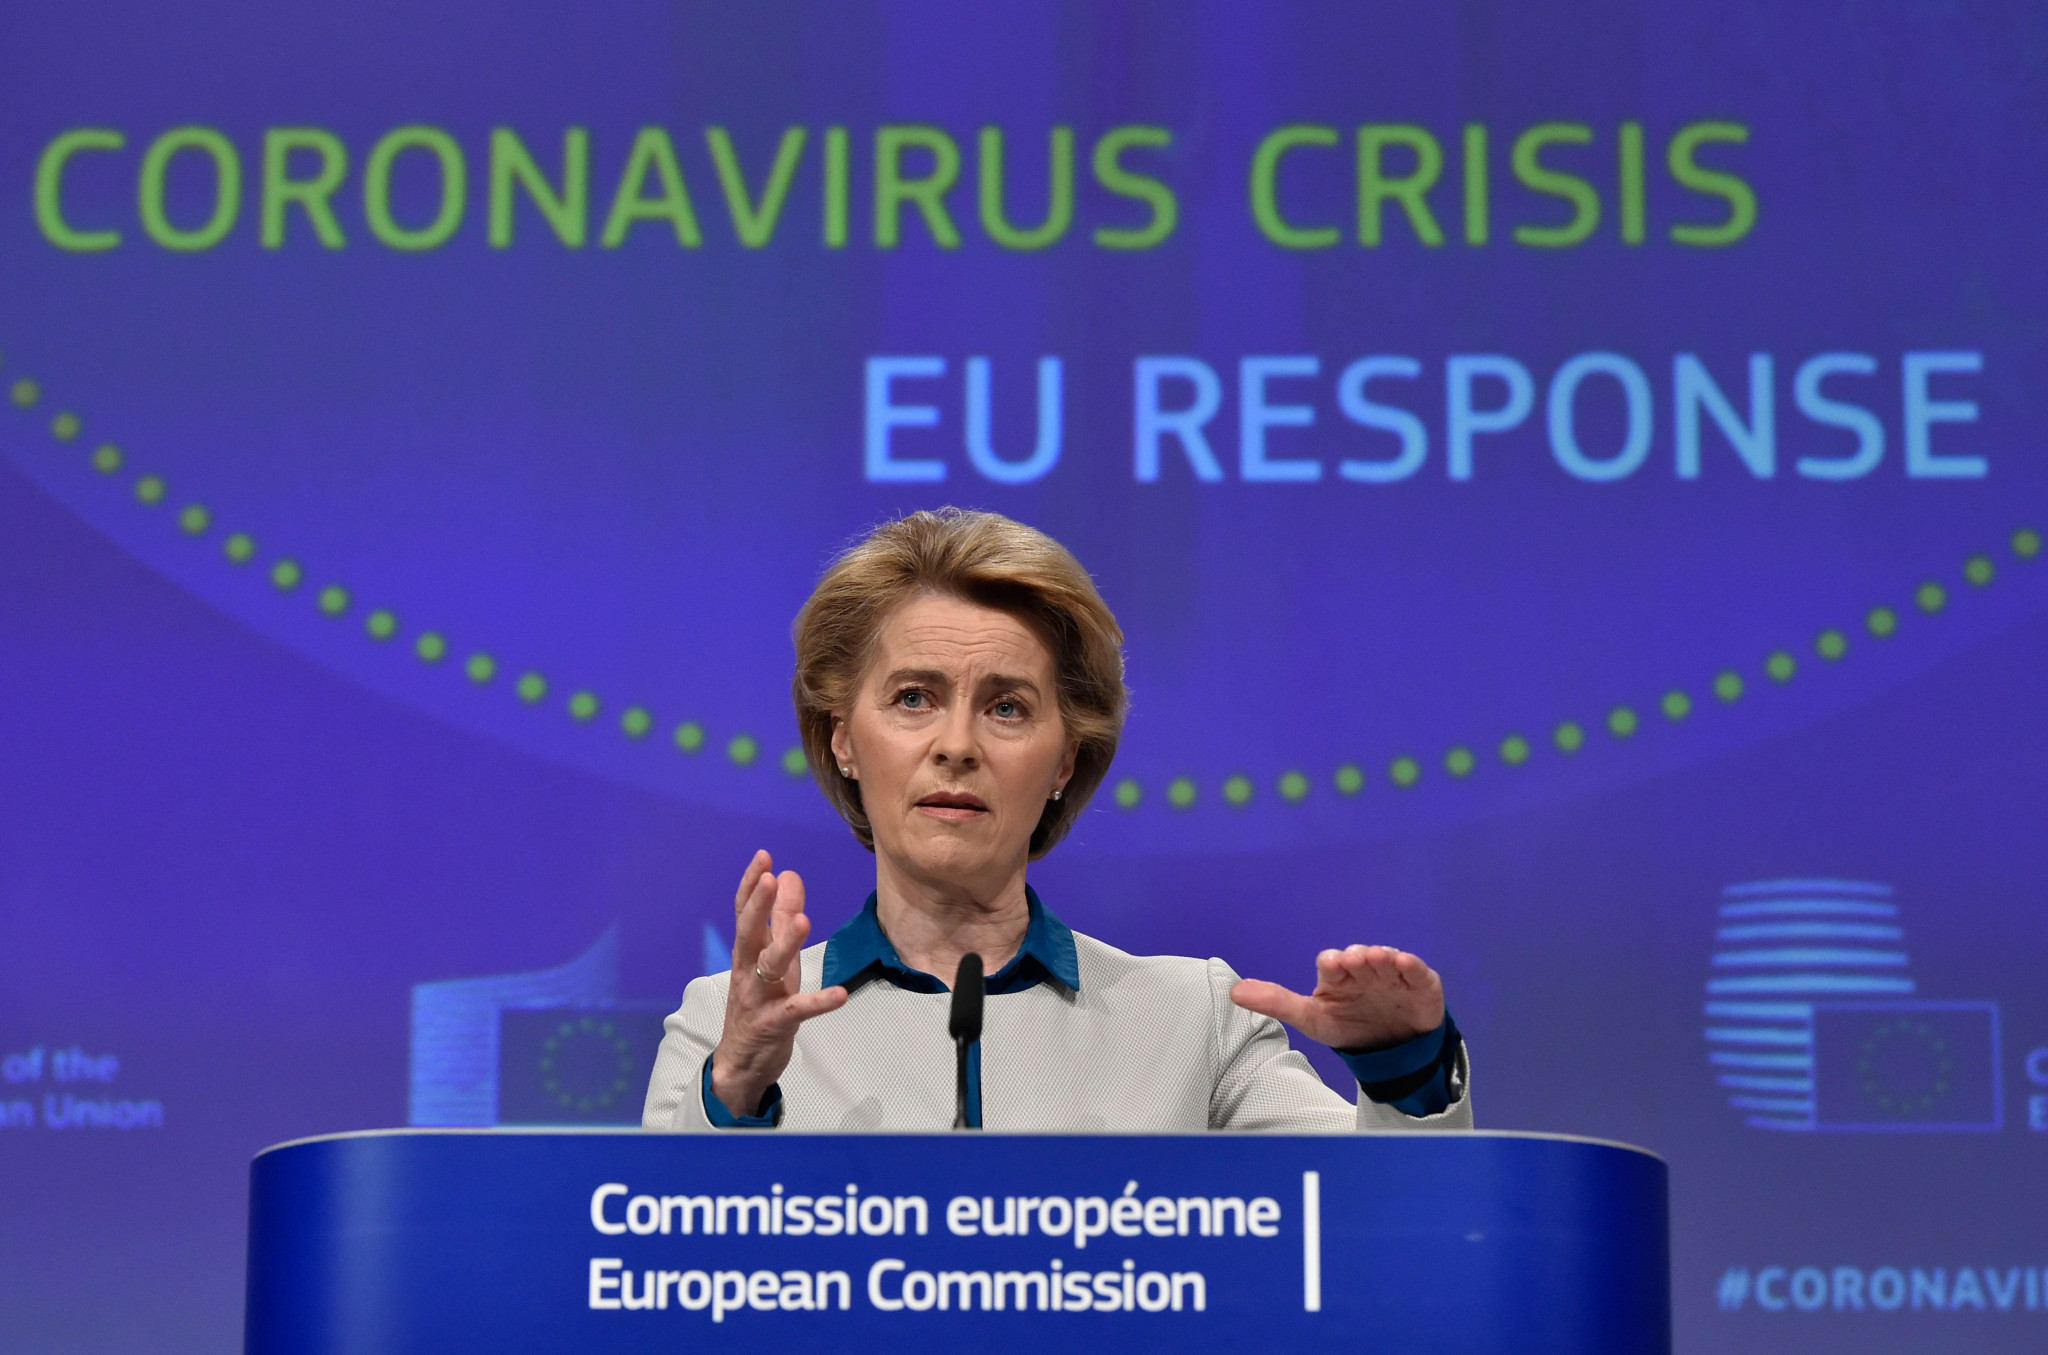 The position paper has been sent to European Commission President Ursula von der Leyen ©Getty Images